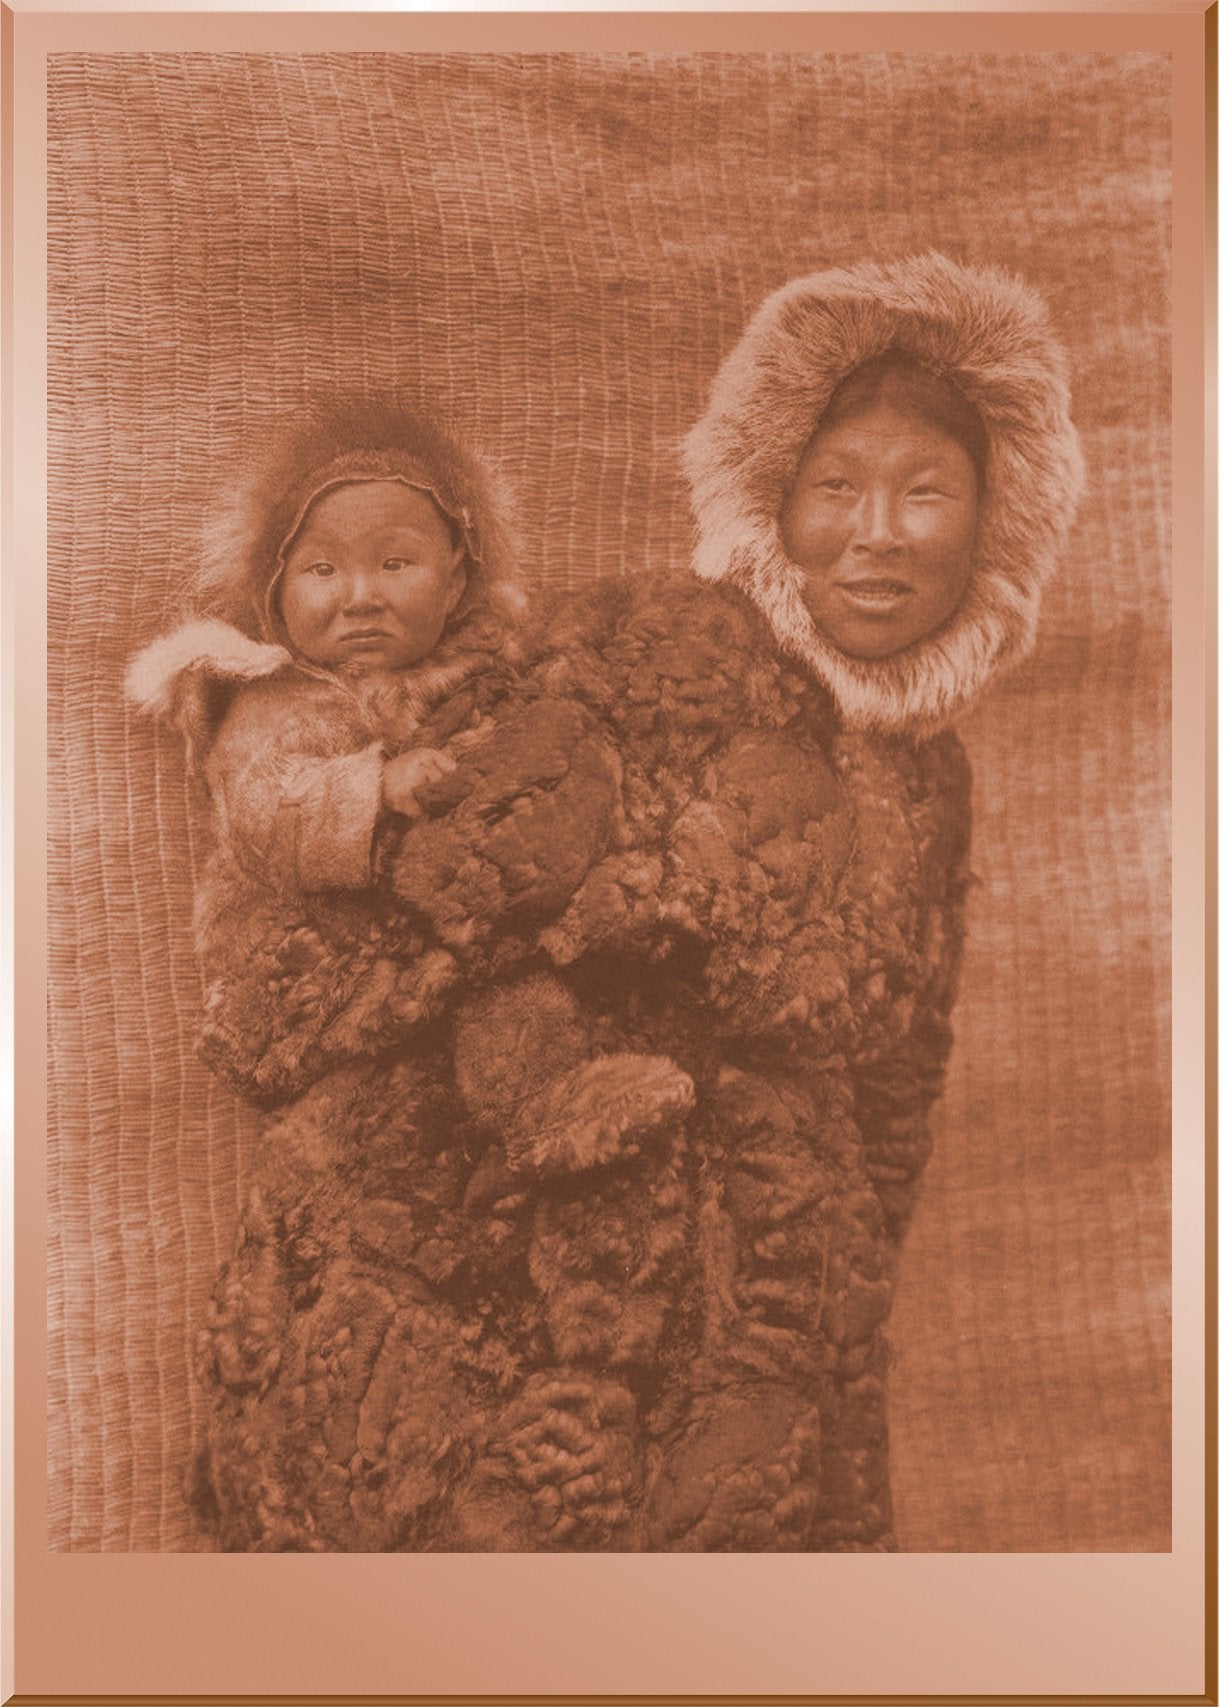 Woman and Child - Nunivak